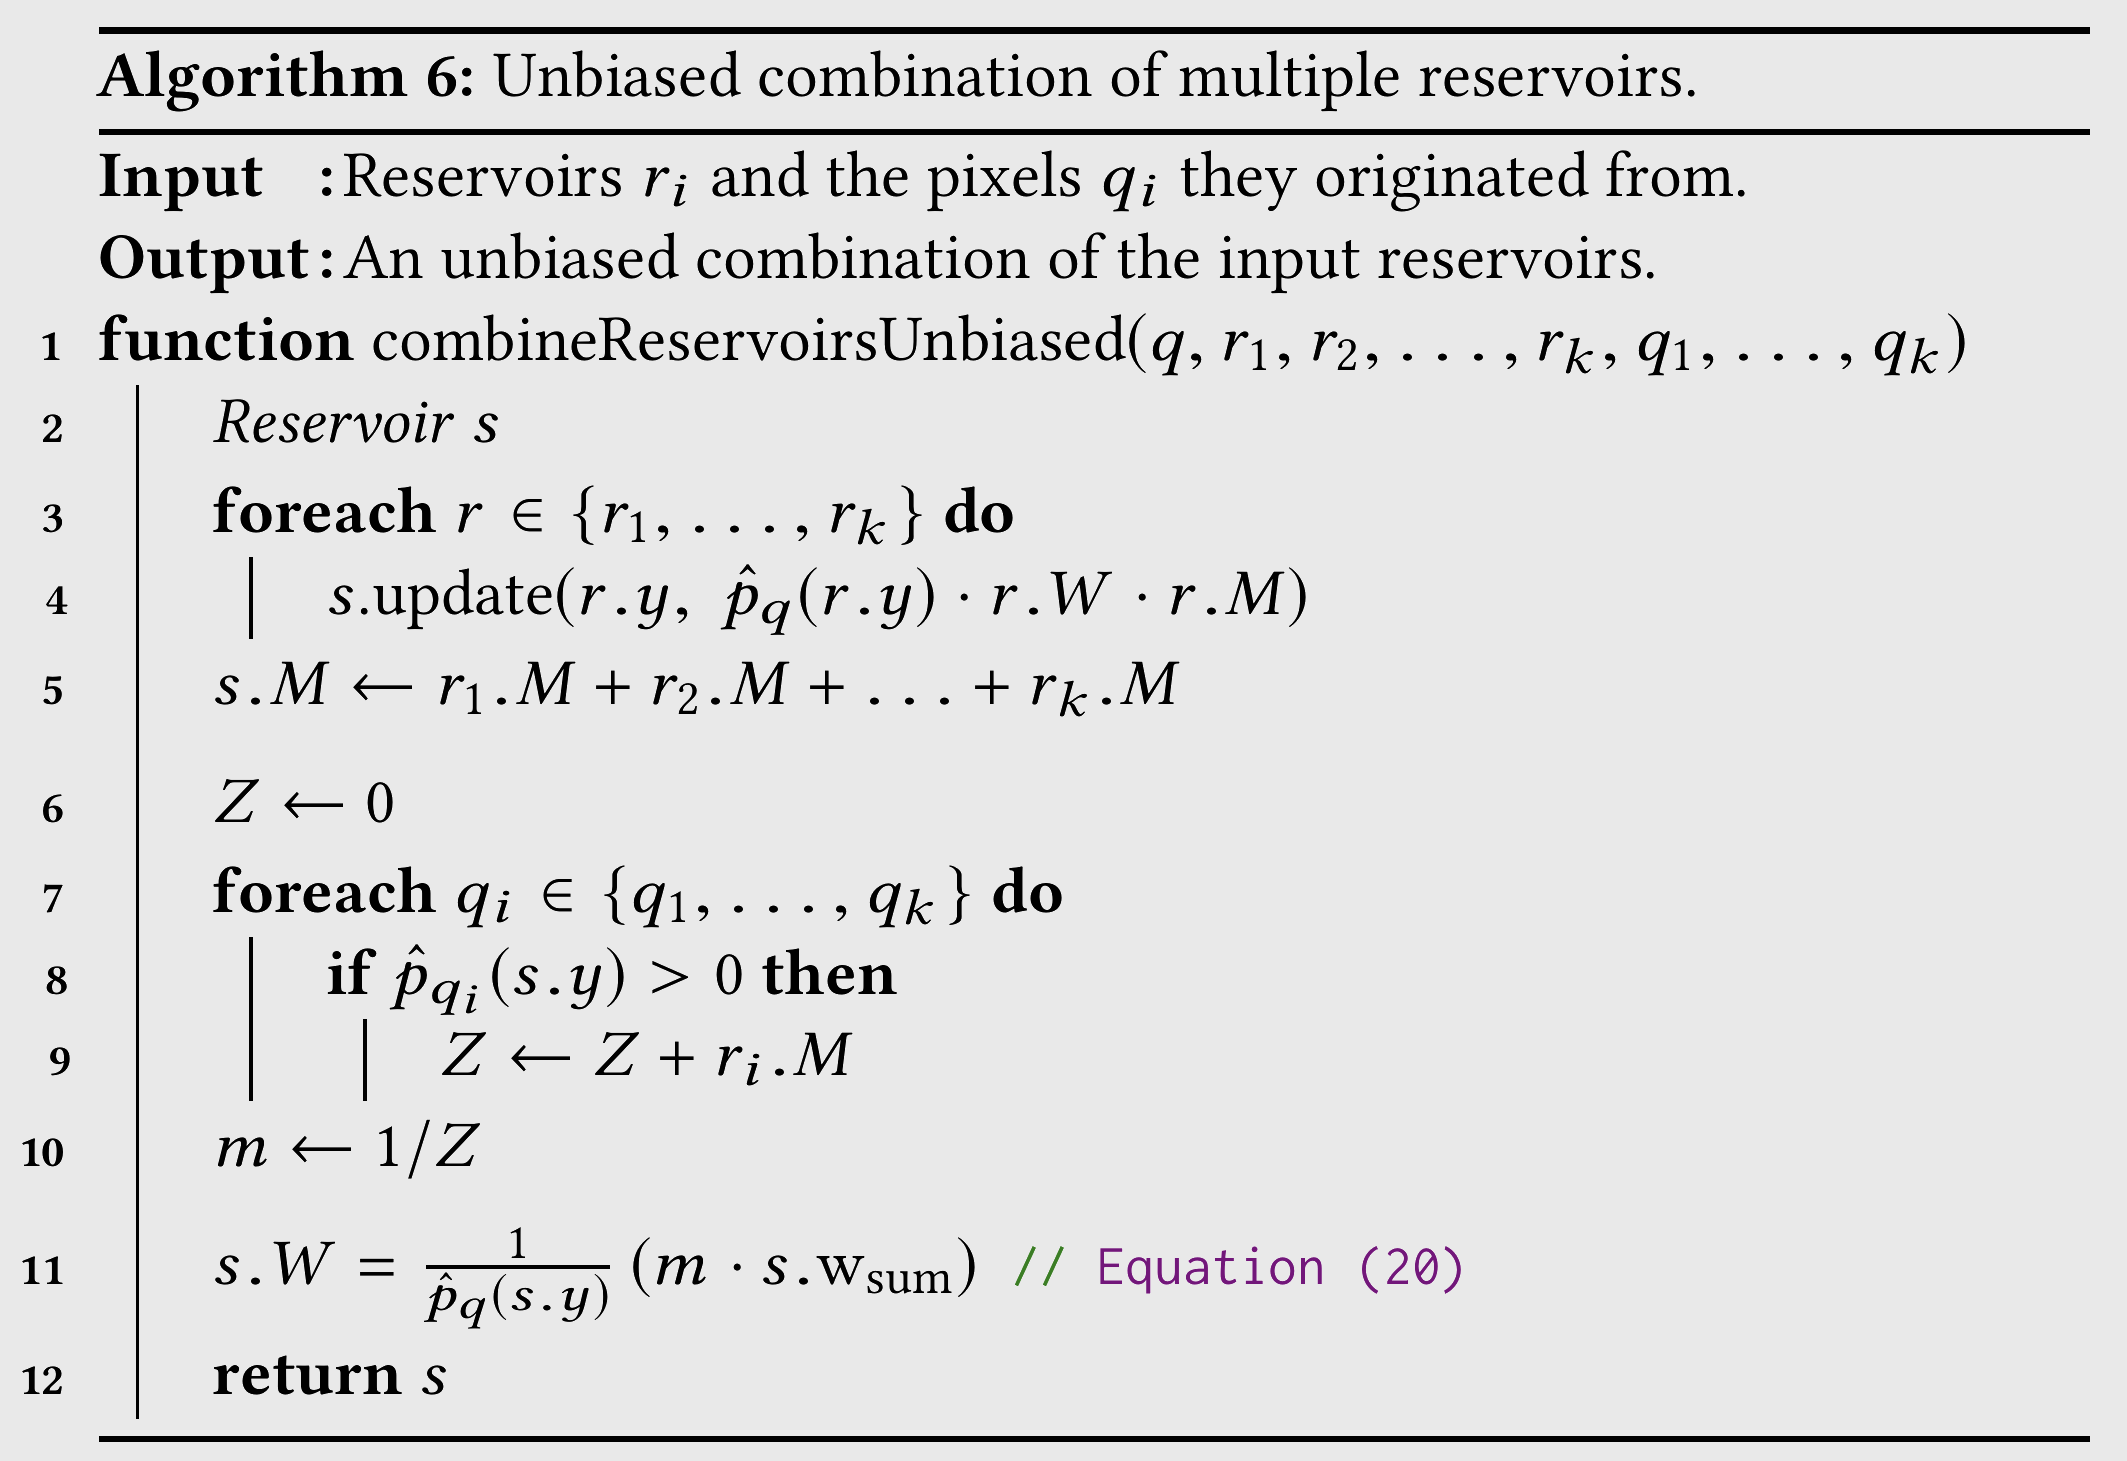 Pseudocode for unbiased reservoir combination